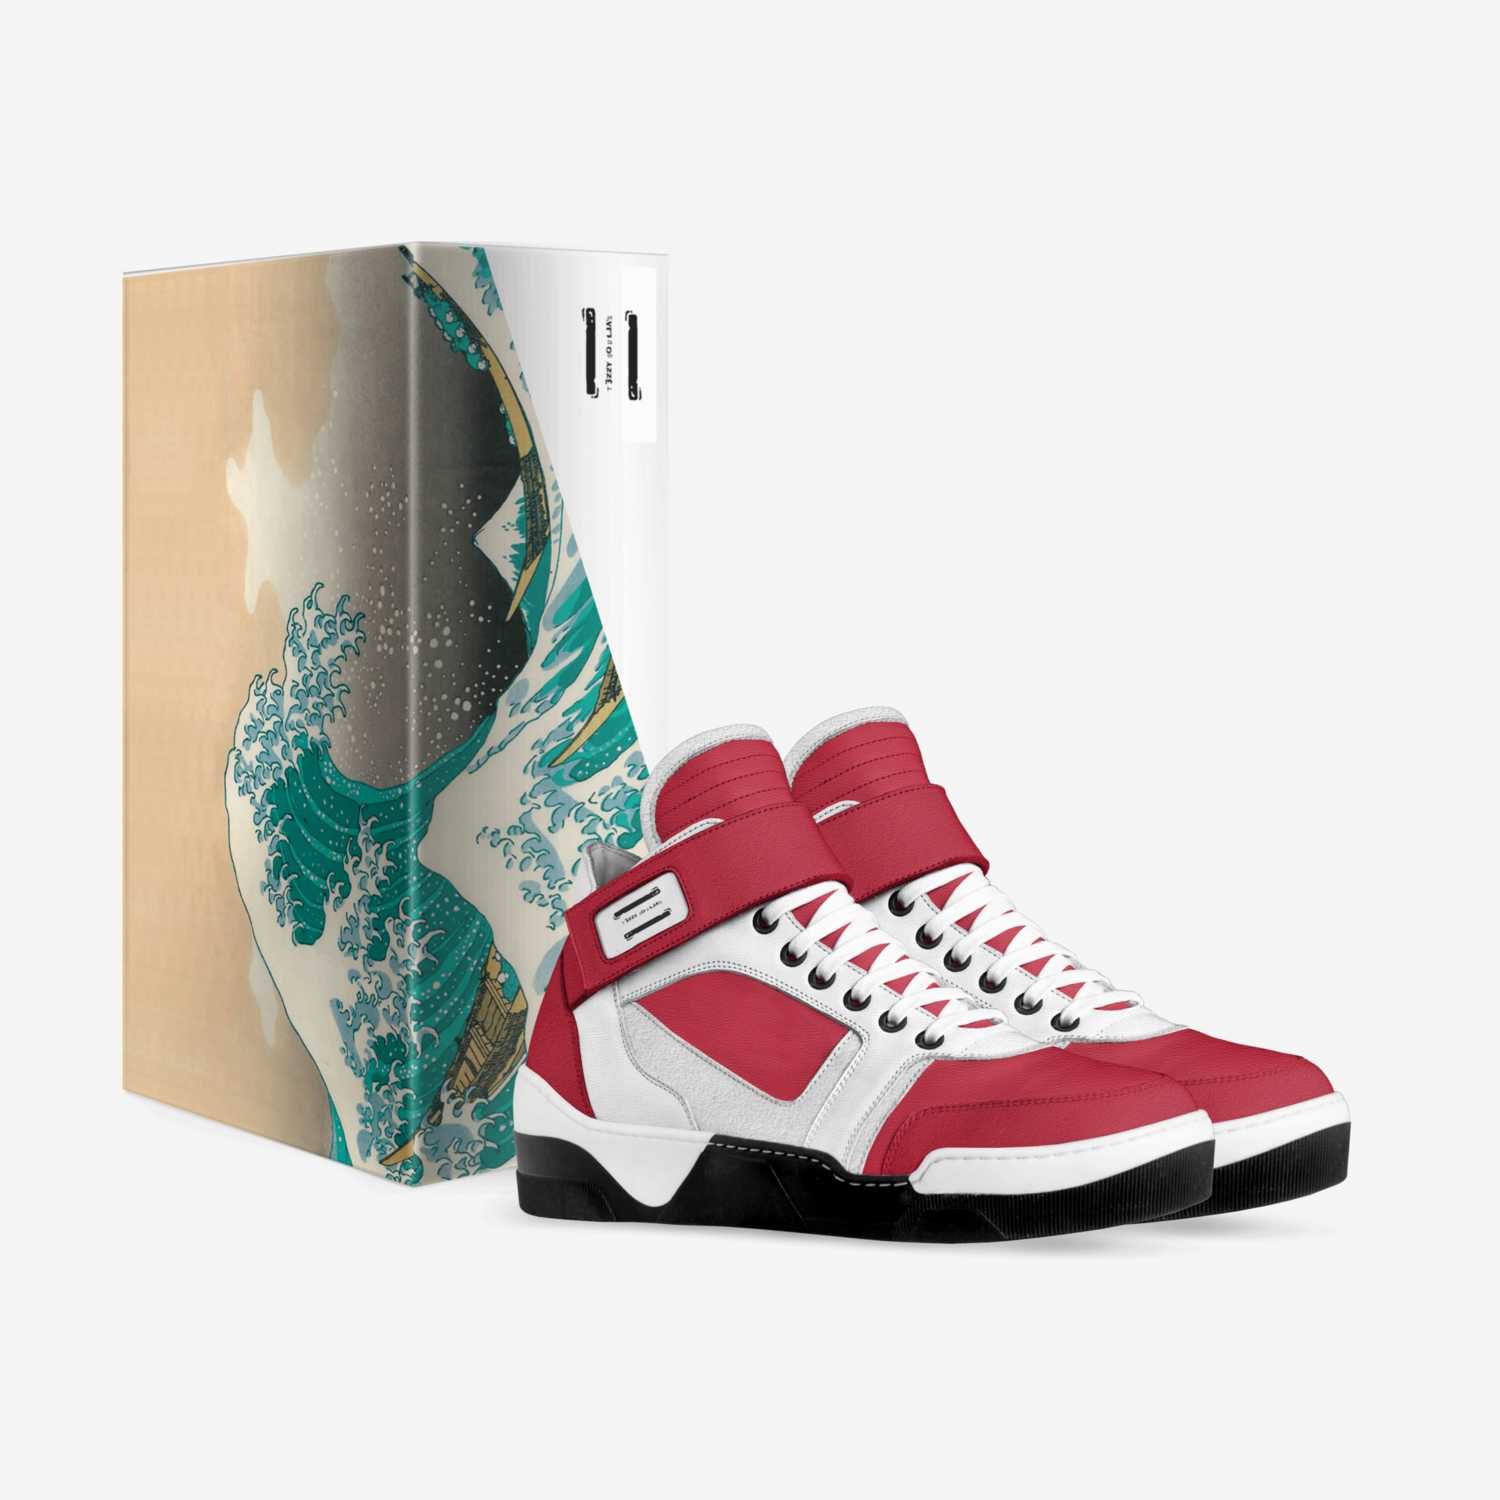 т3zzy ѕoυlja'ѕ custom made in Italy shoes by тιммcarвone | Box view